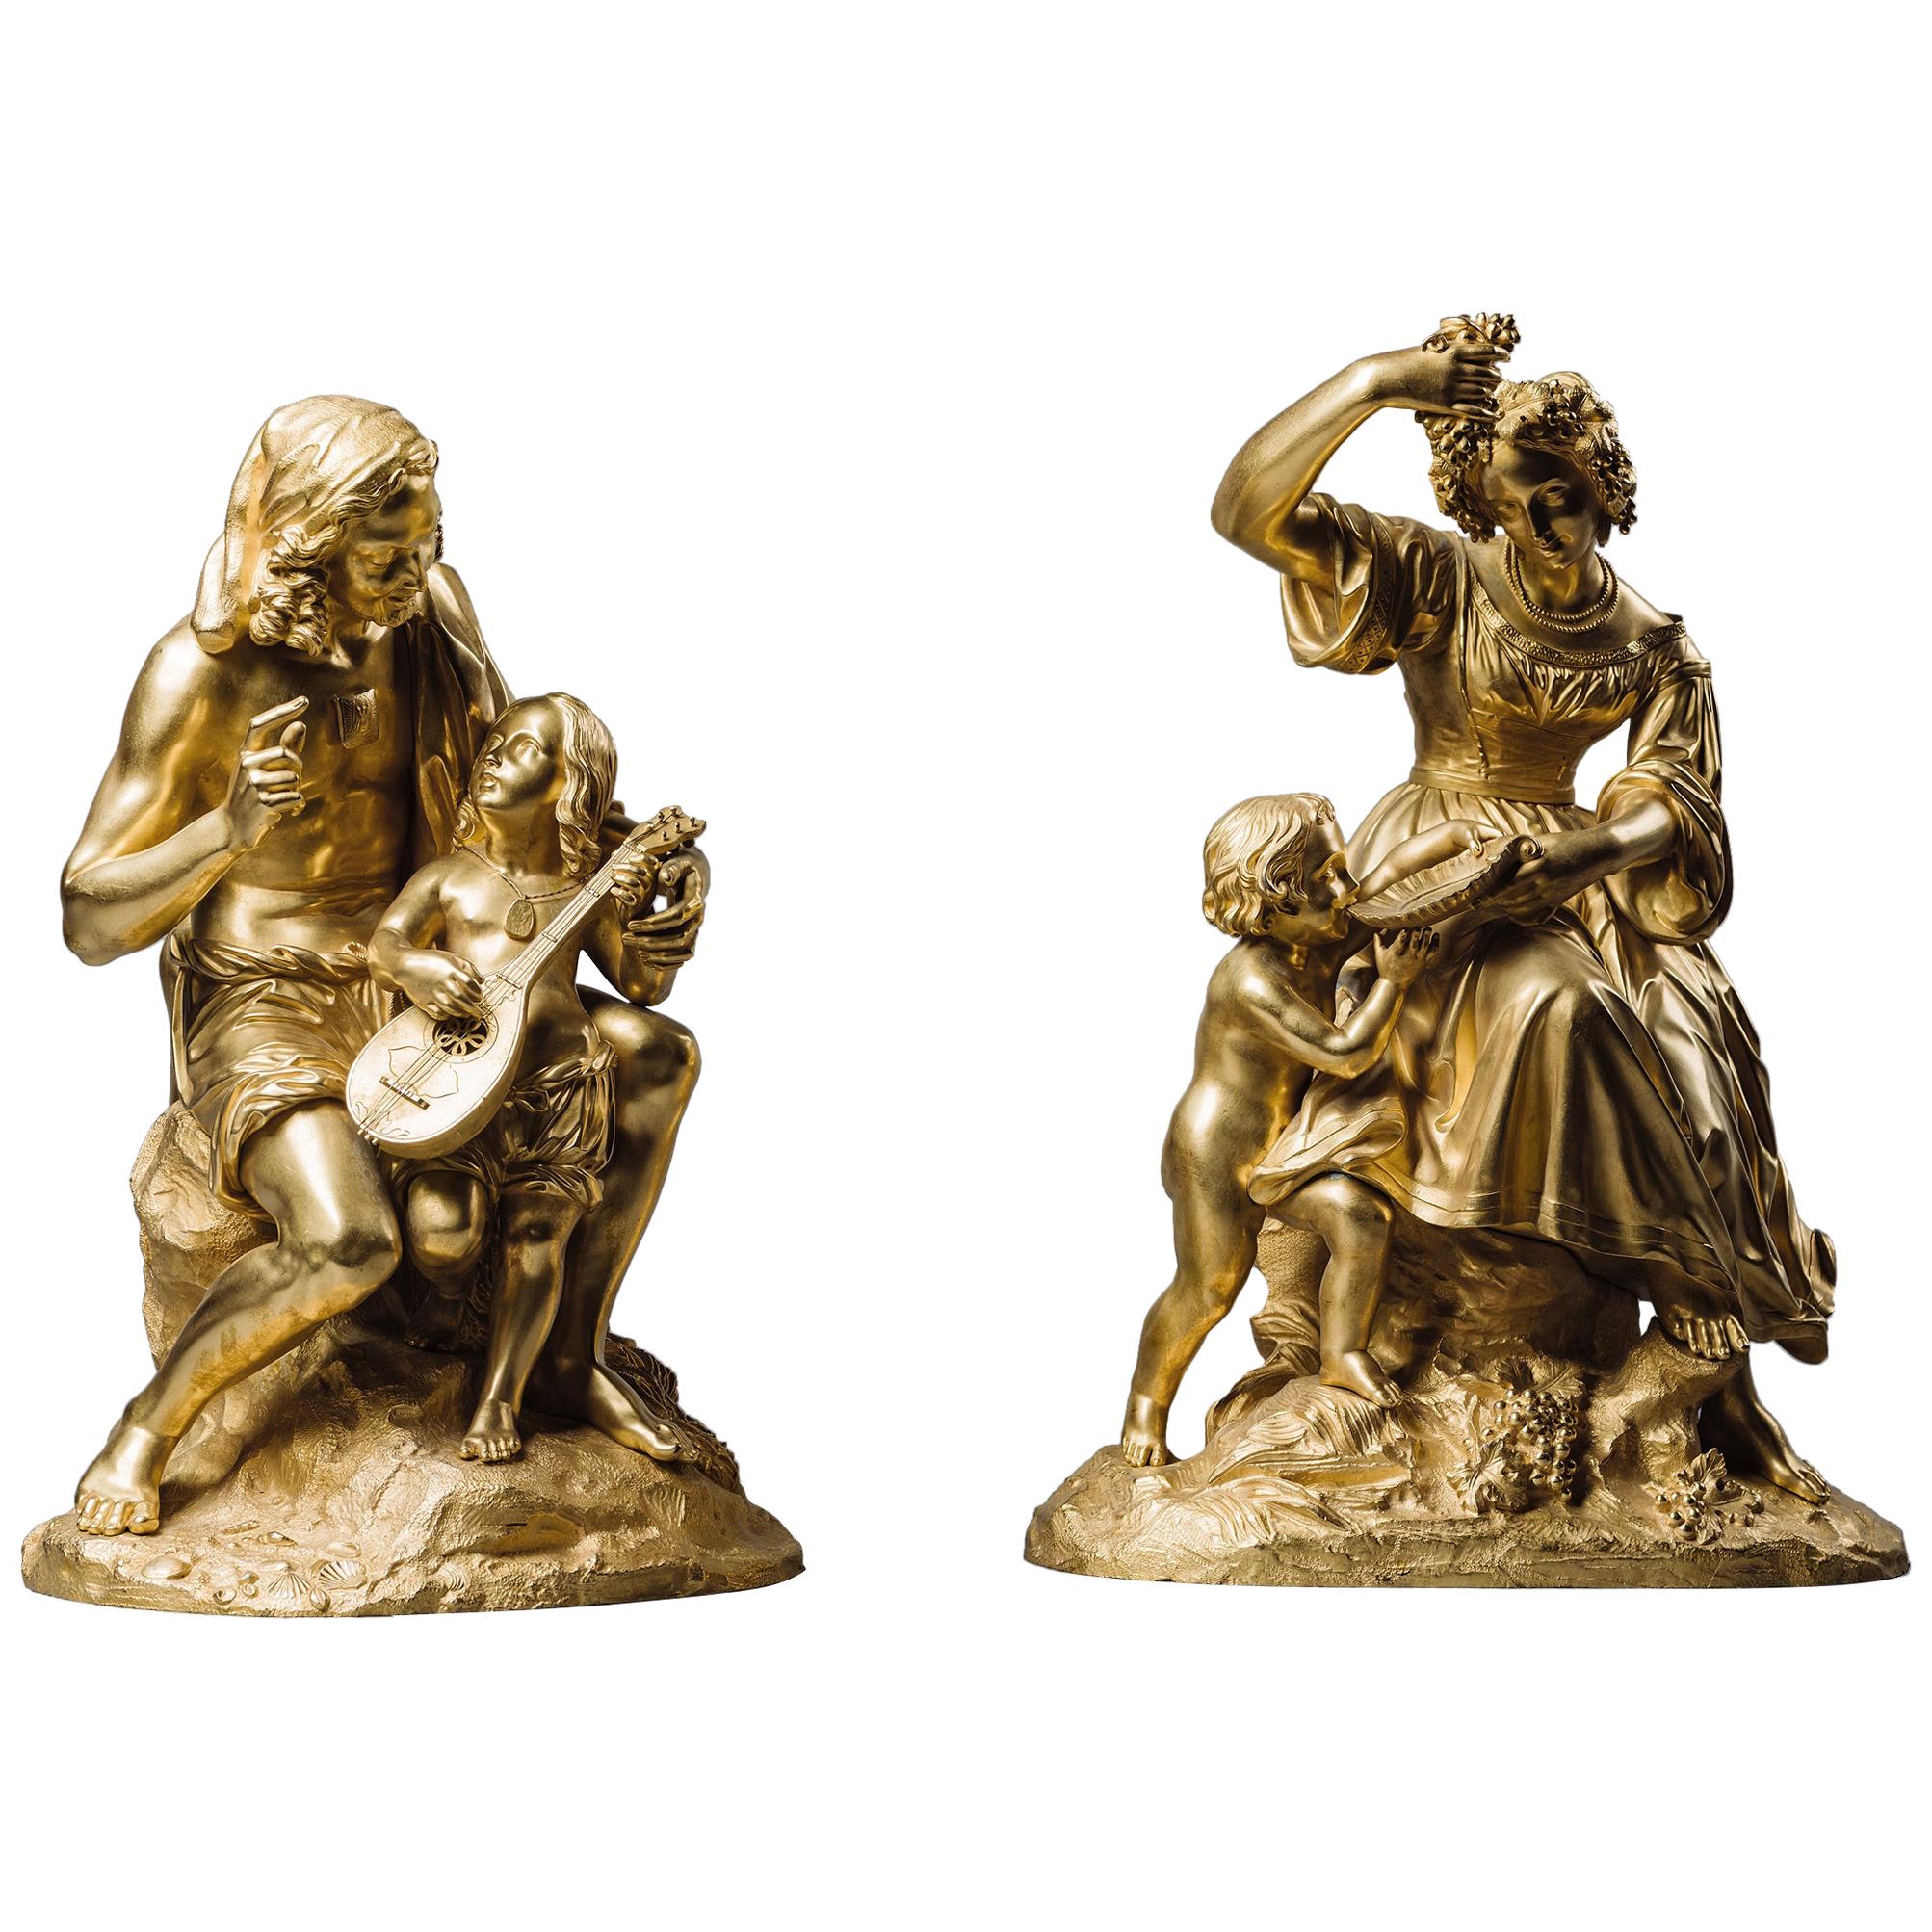 Pair of Restoration Period Gilt-Bronze Allegorical Groups. French, circa 1830